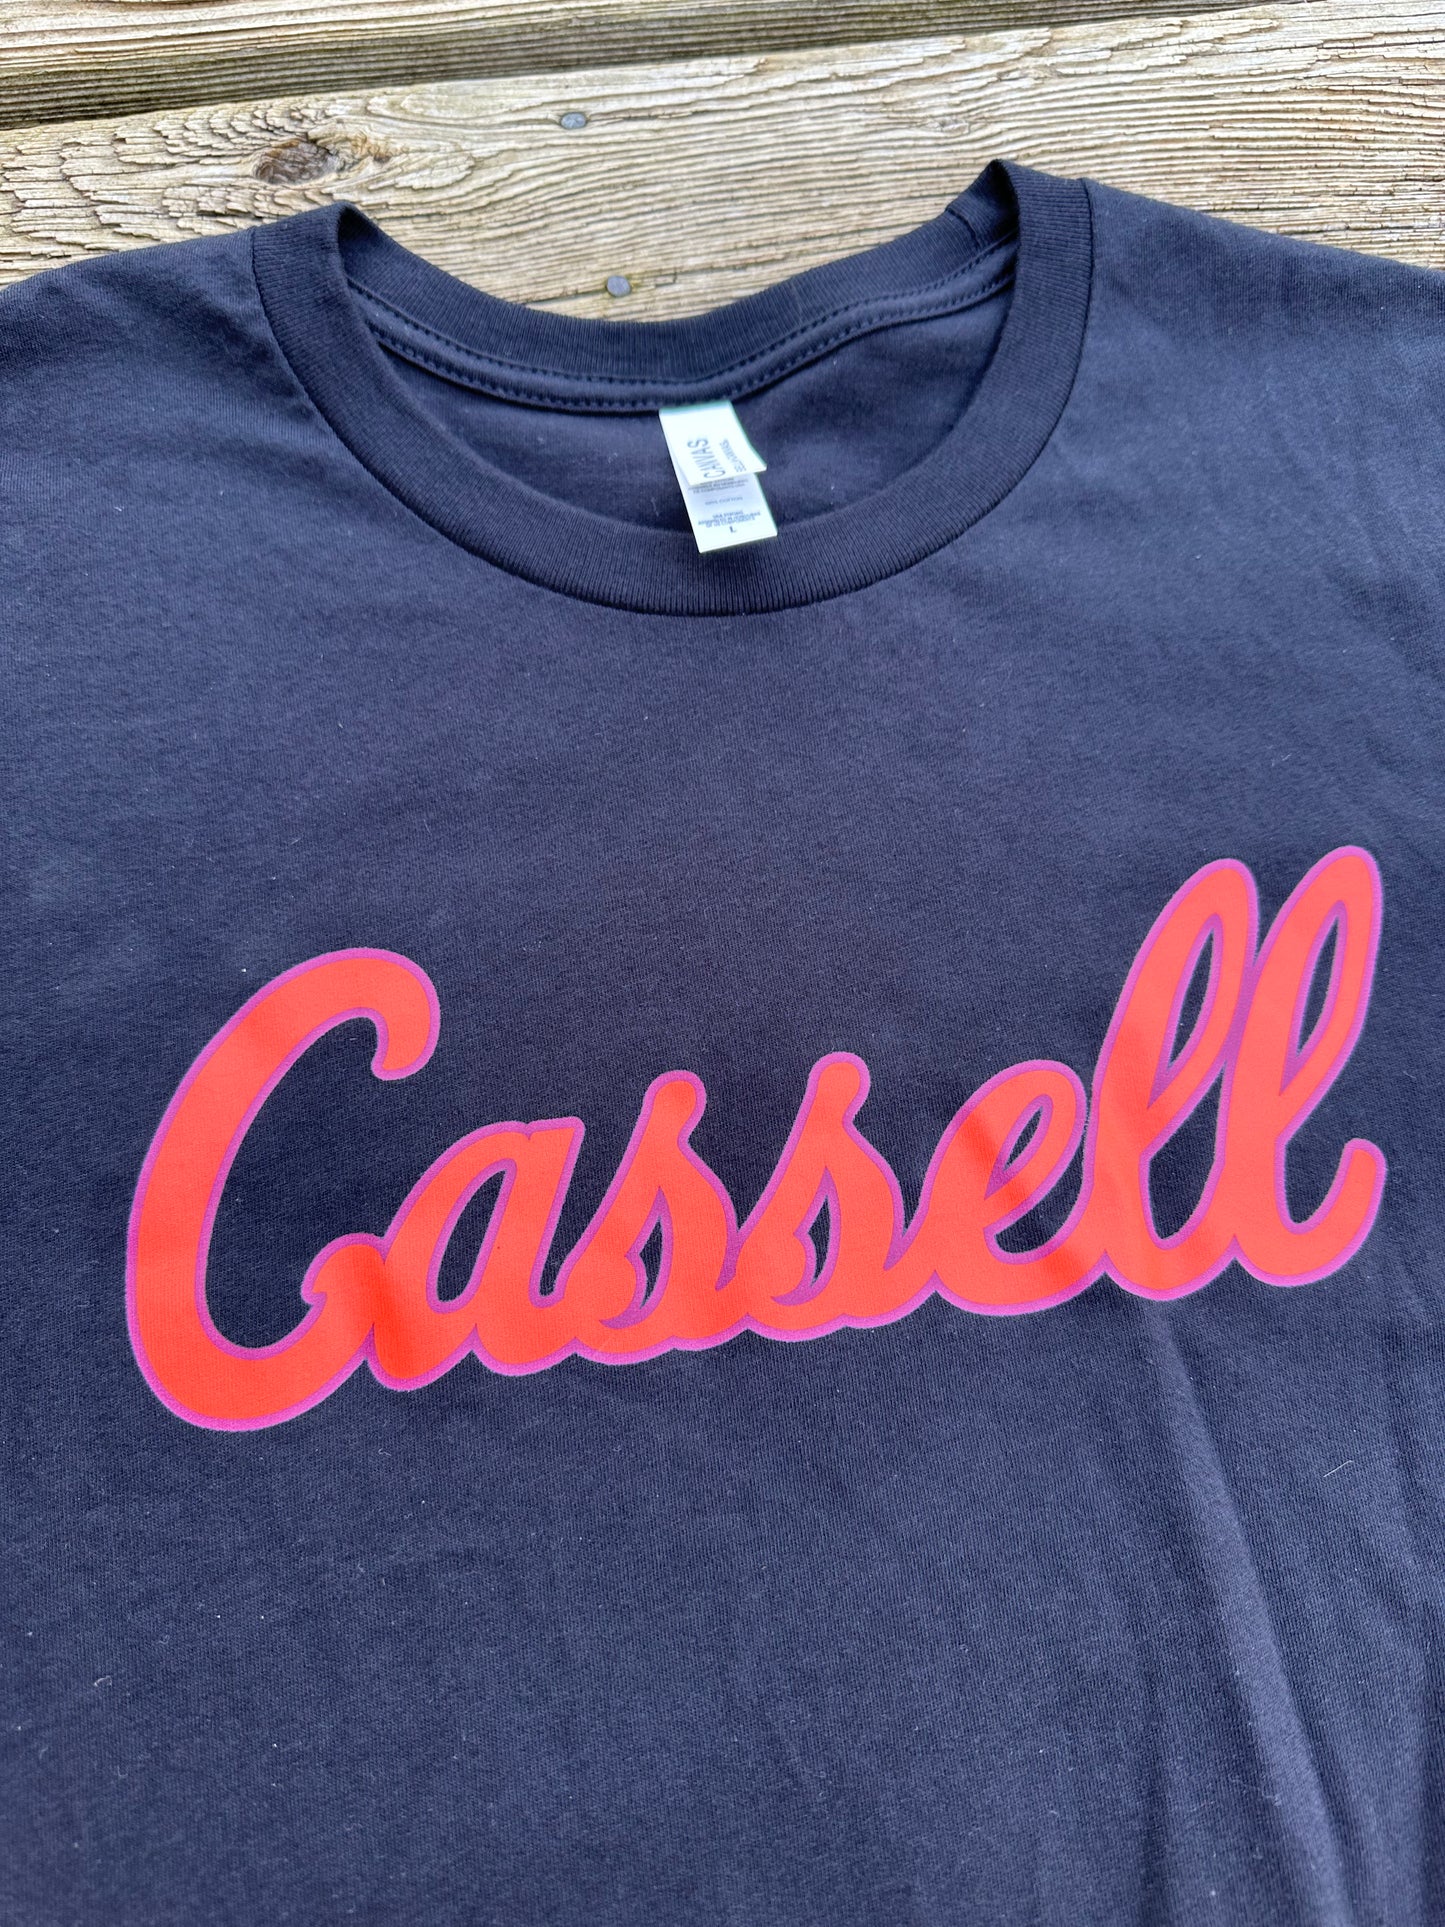 Cassell Script T-Shirt (Large) - SALE